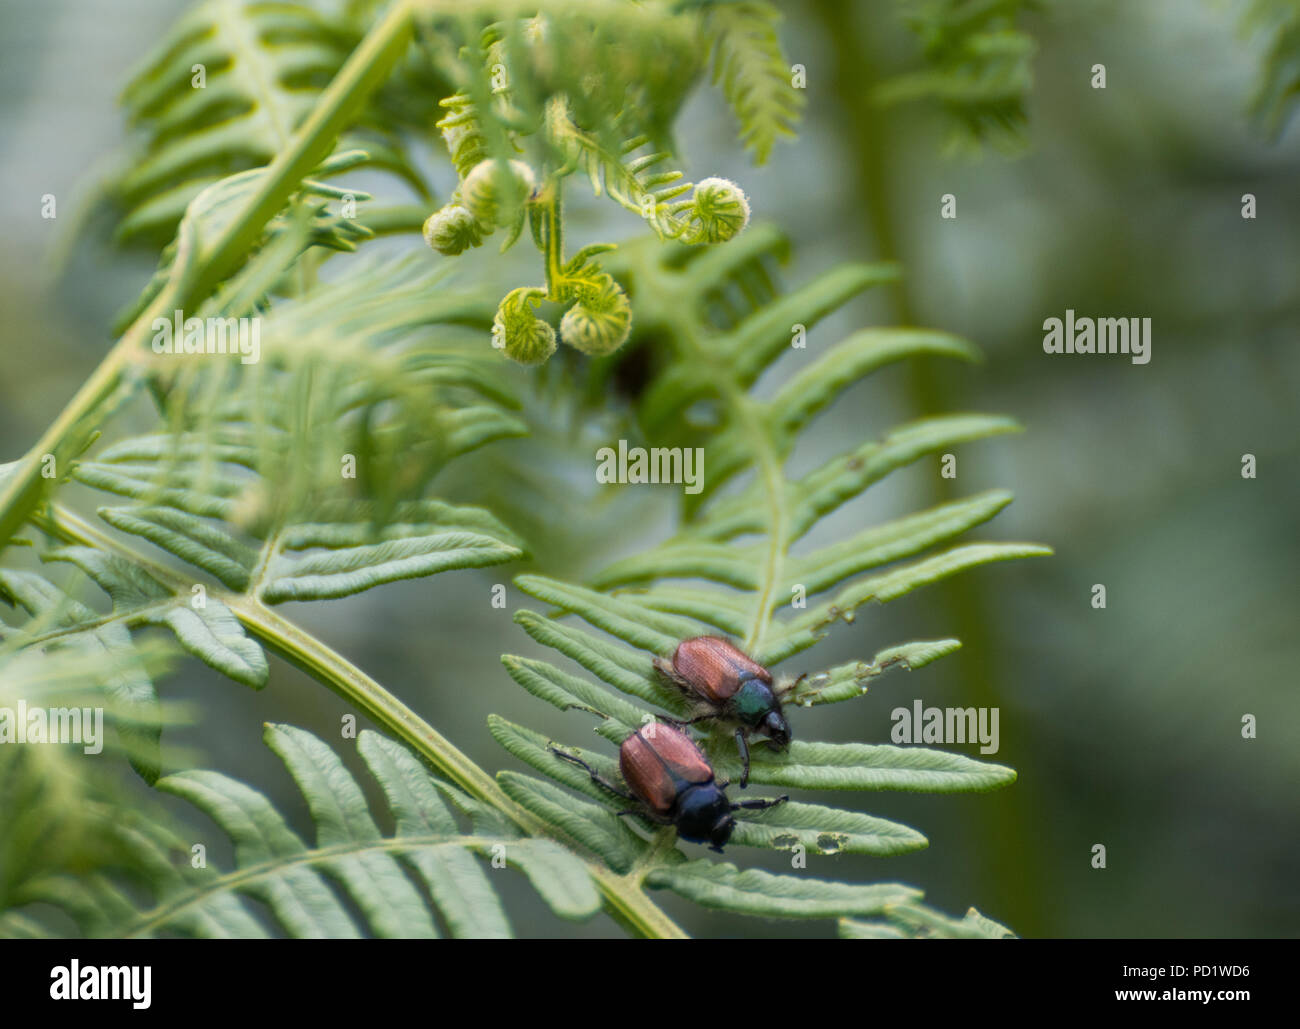 Two bracken chafer beetles on...bracken! Stock Photo